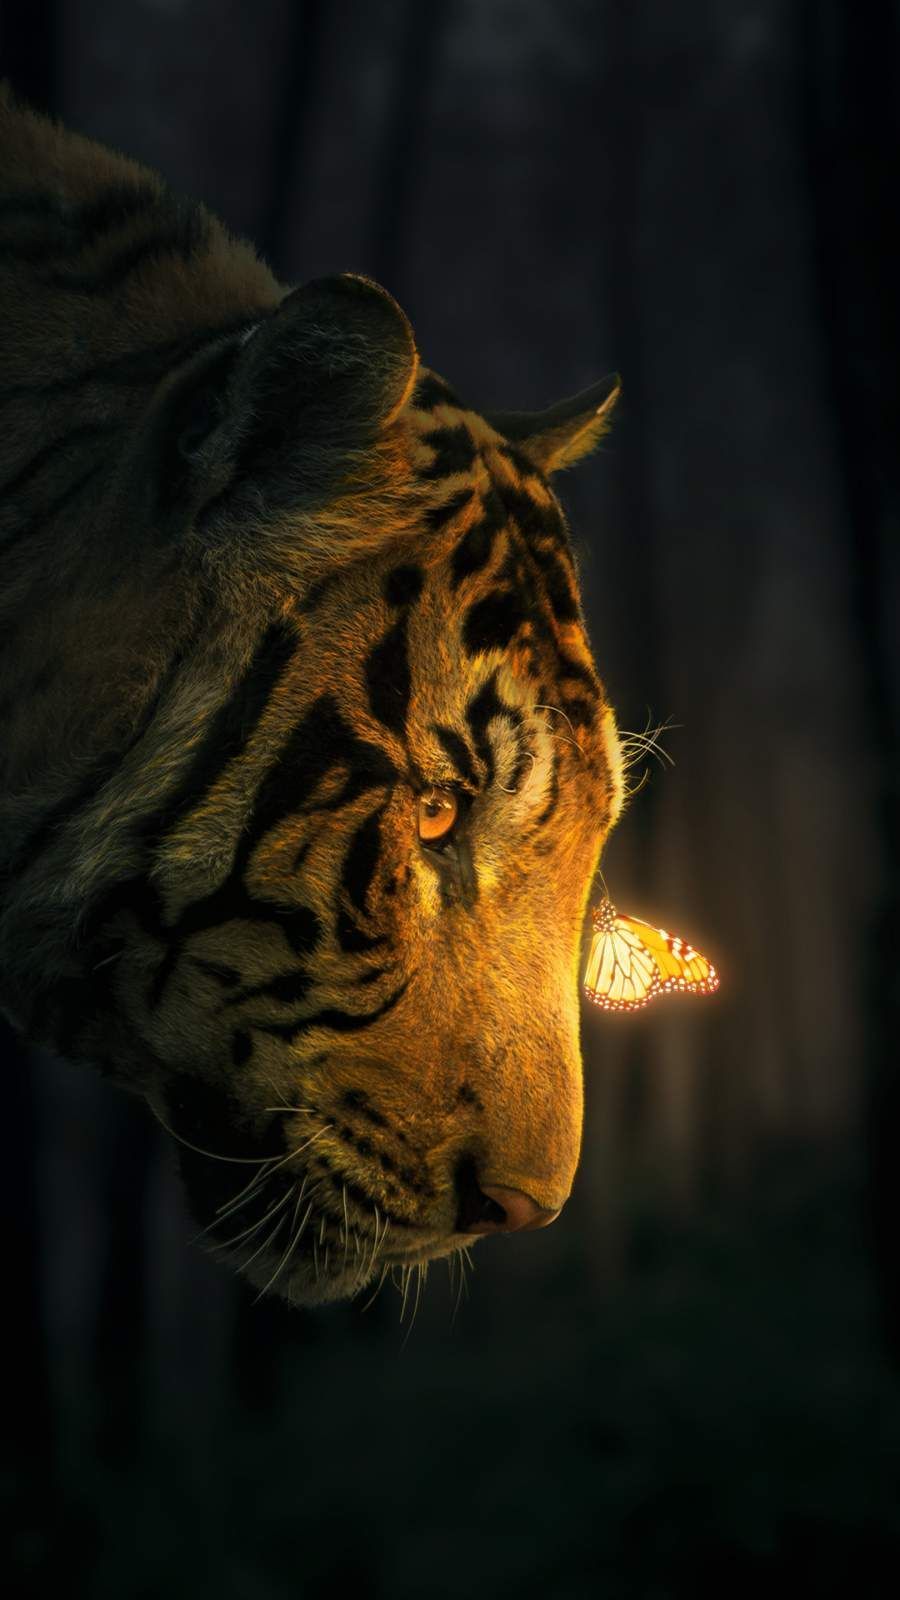 Glow in the Dark iPhone Wallpaper. Tiger wallpaper, Tiger wallpaper iphone, Animal wallpaper